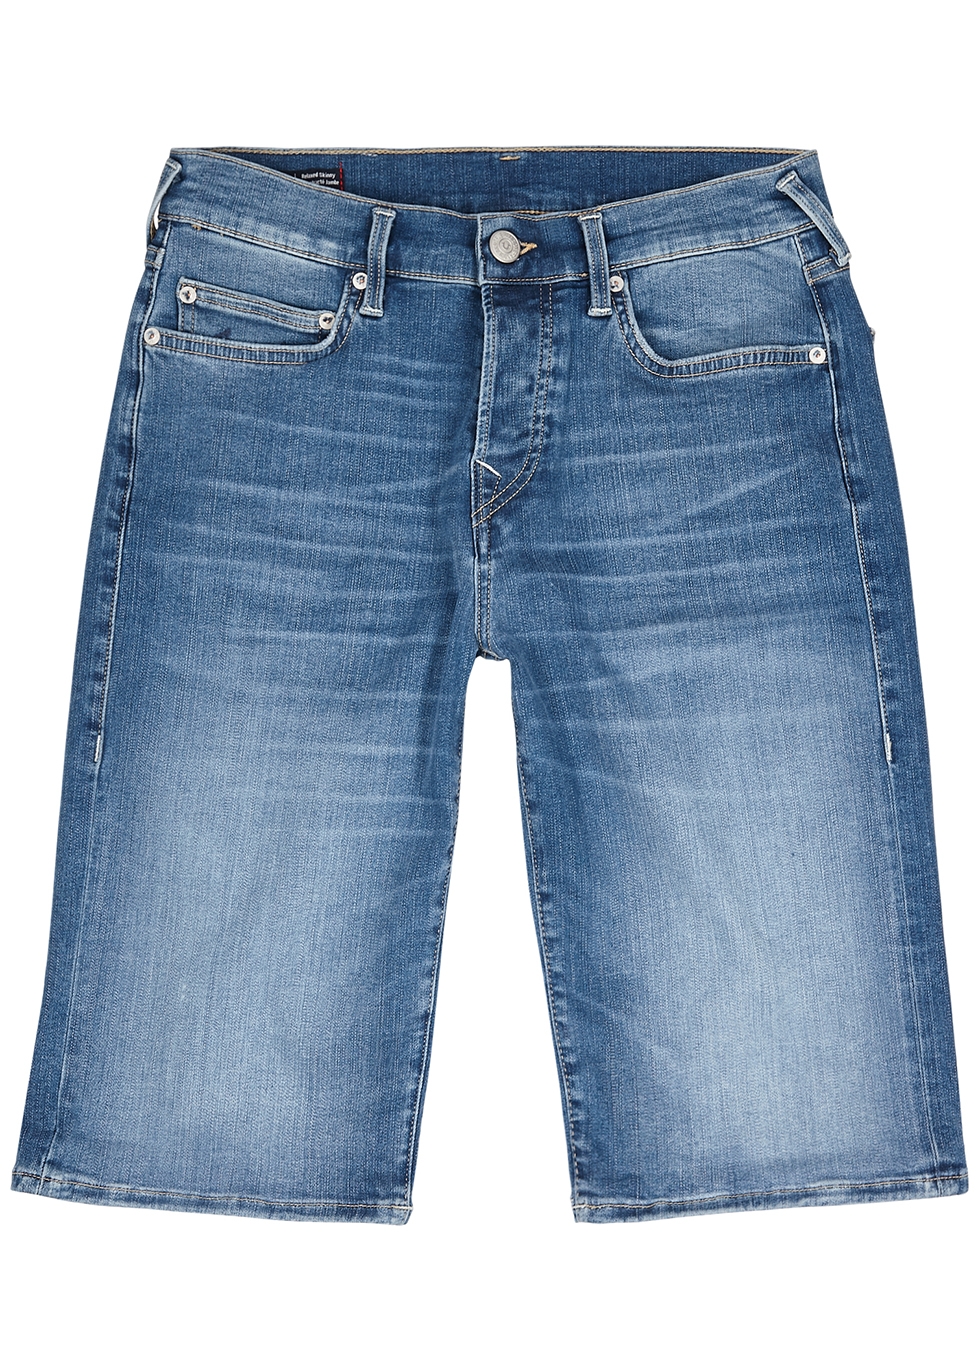 jean shorts true religion